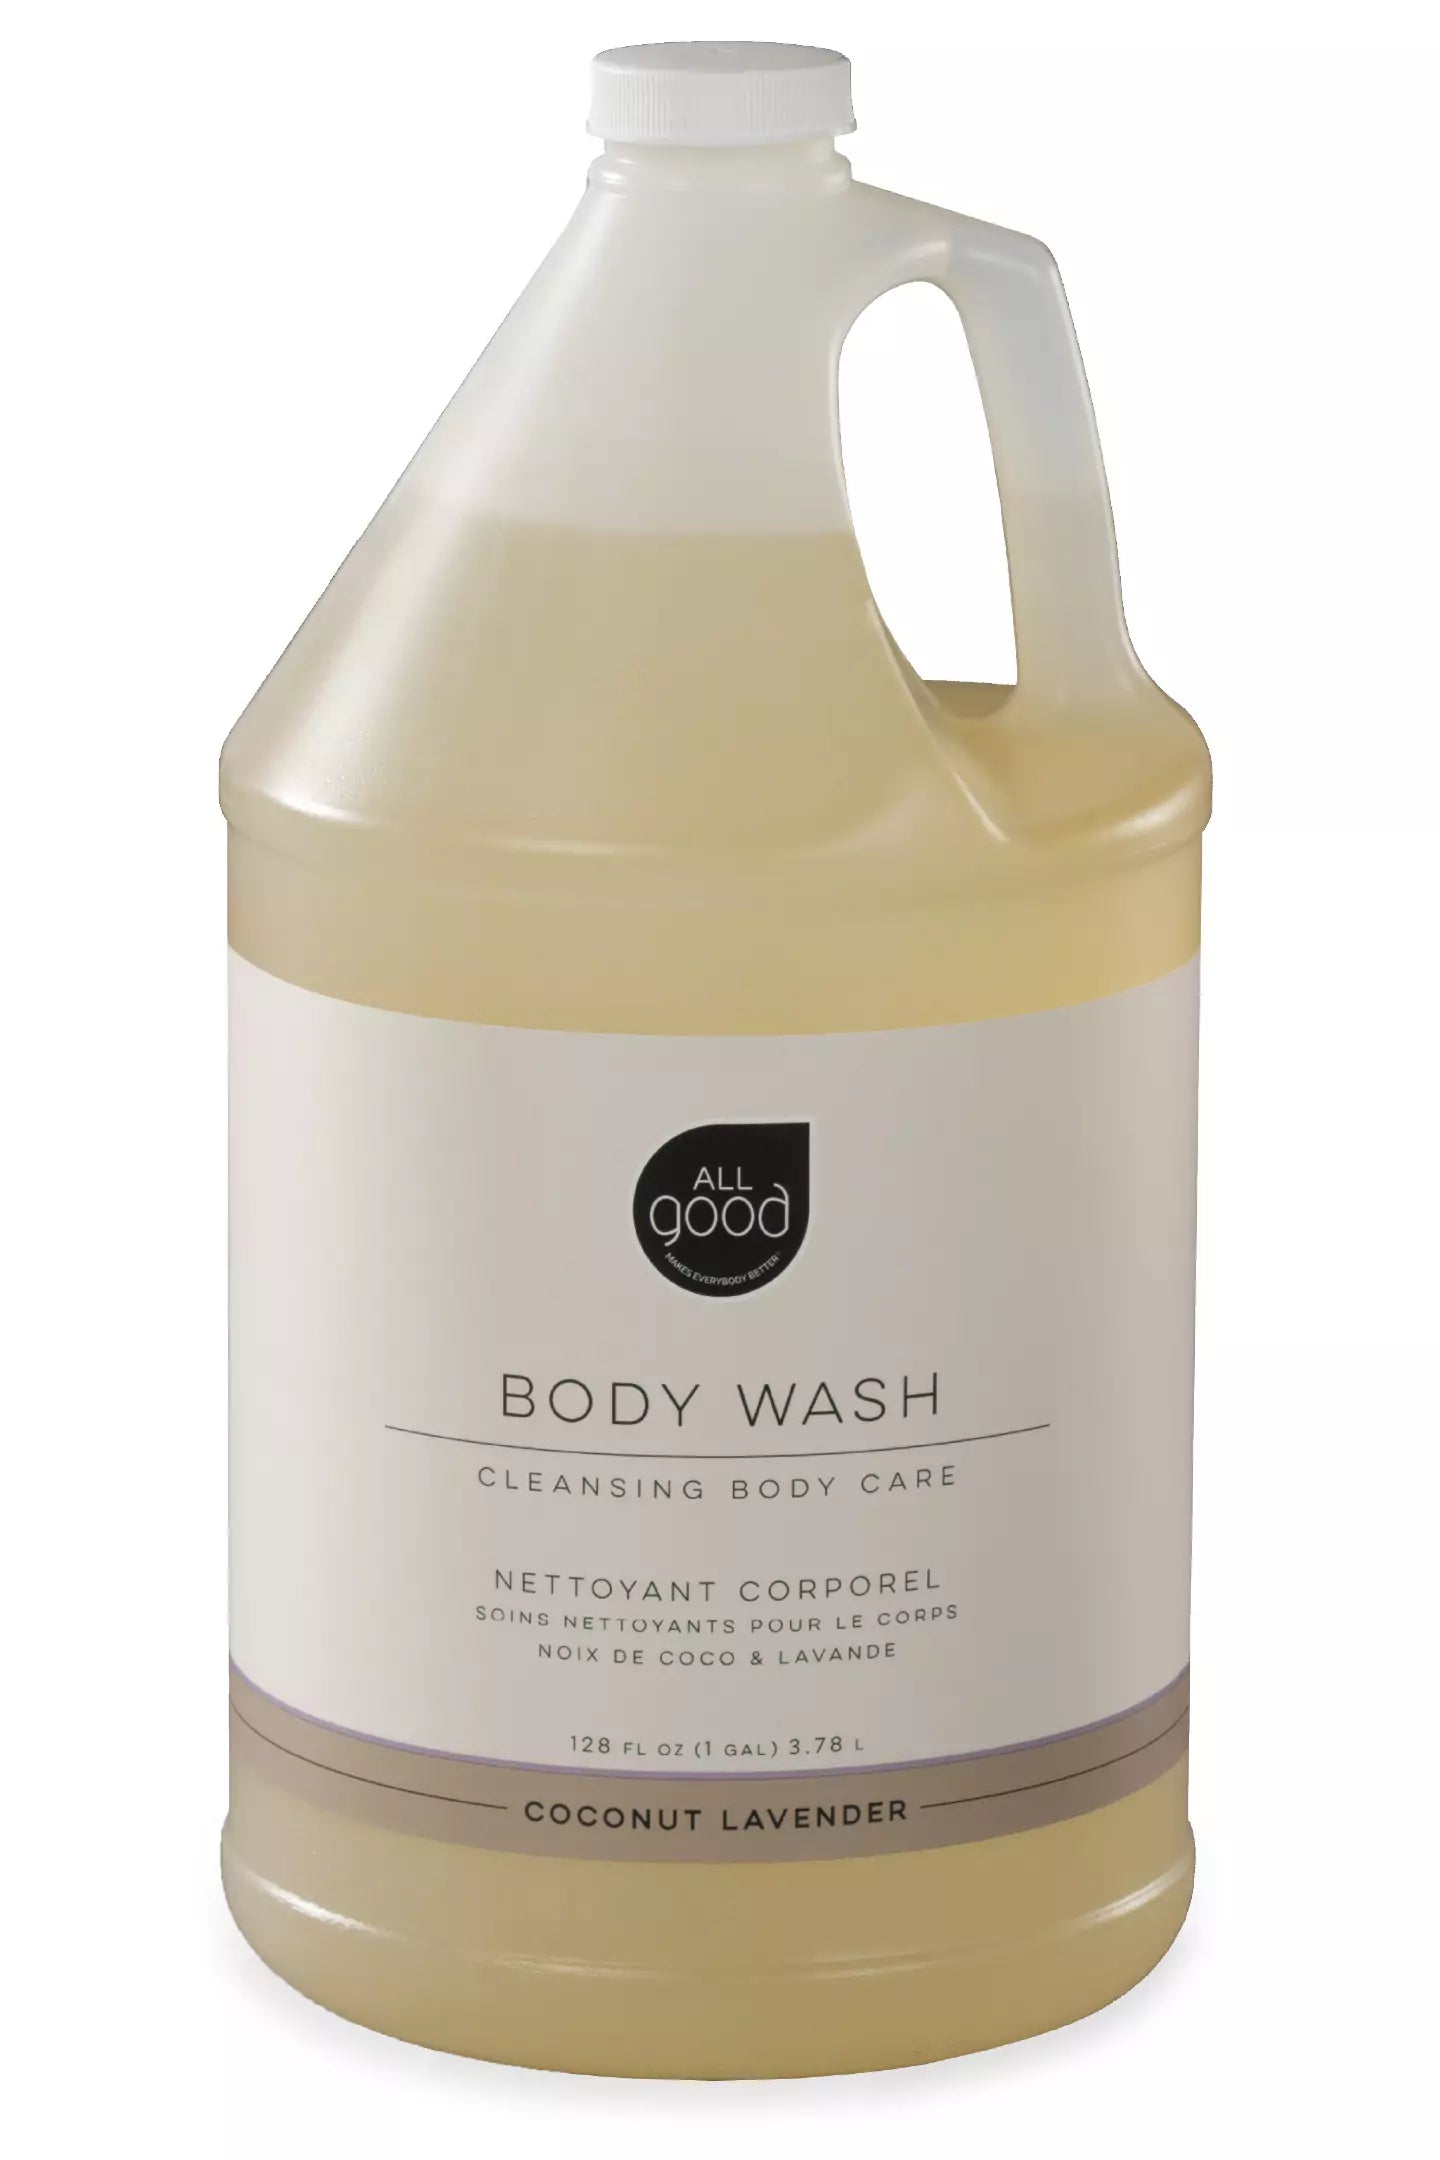 Coconut Lavender Body Wash 1 Gallon Bottle | Refill at Home